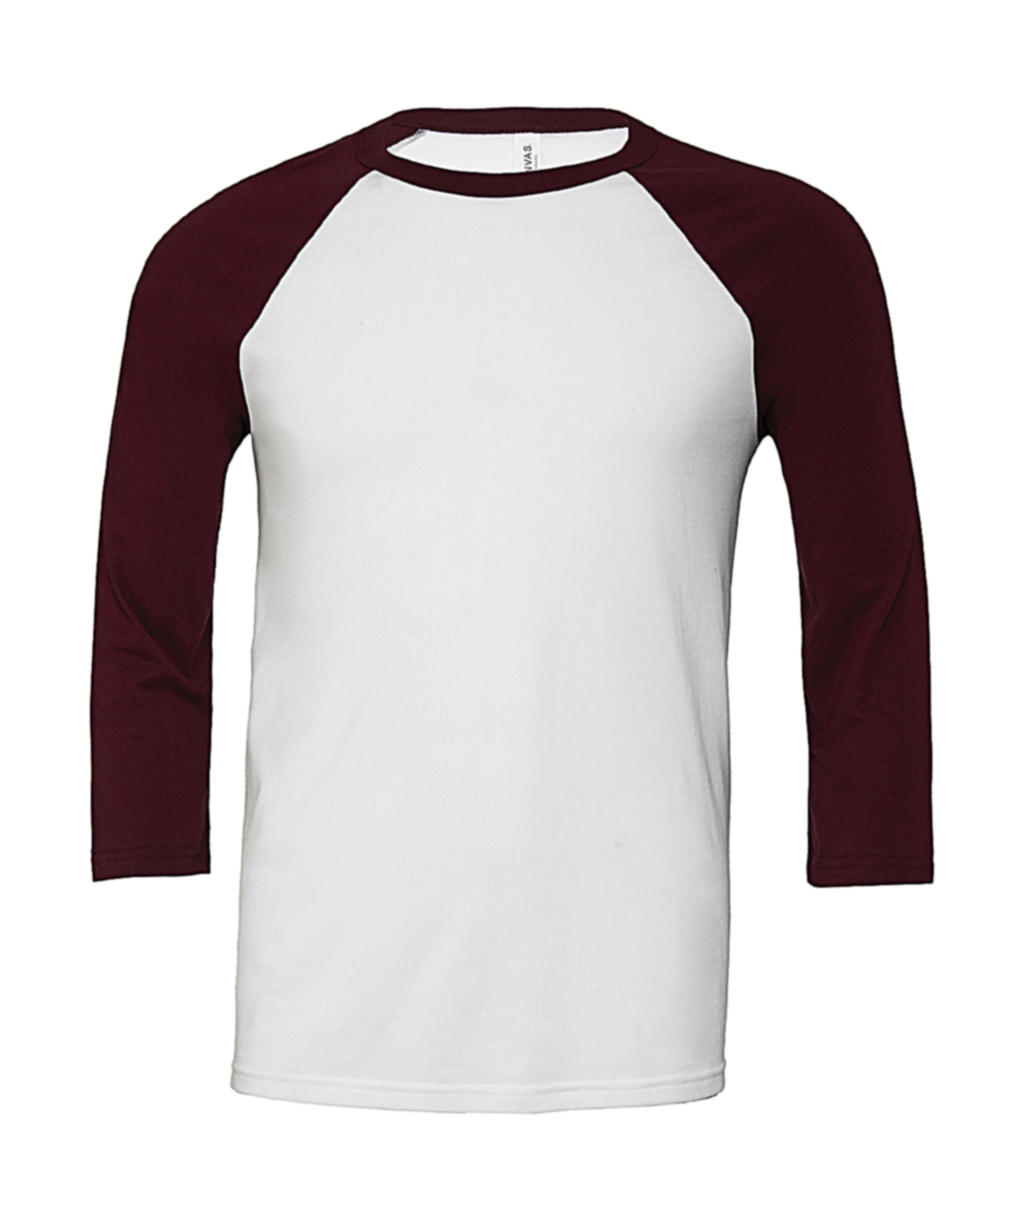  Unisex 3/4 Sleeve Baseball T-Shirt in Farbe White/Maroon